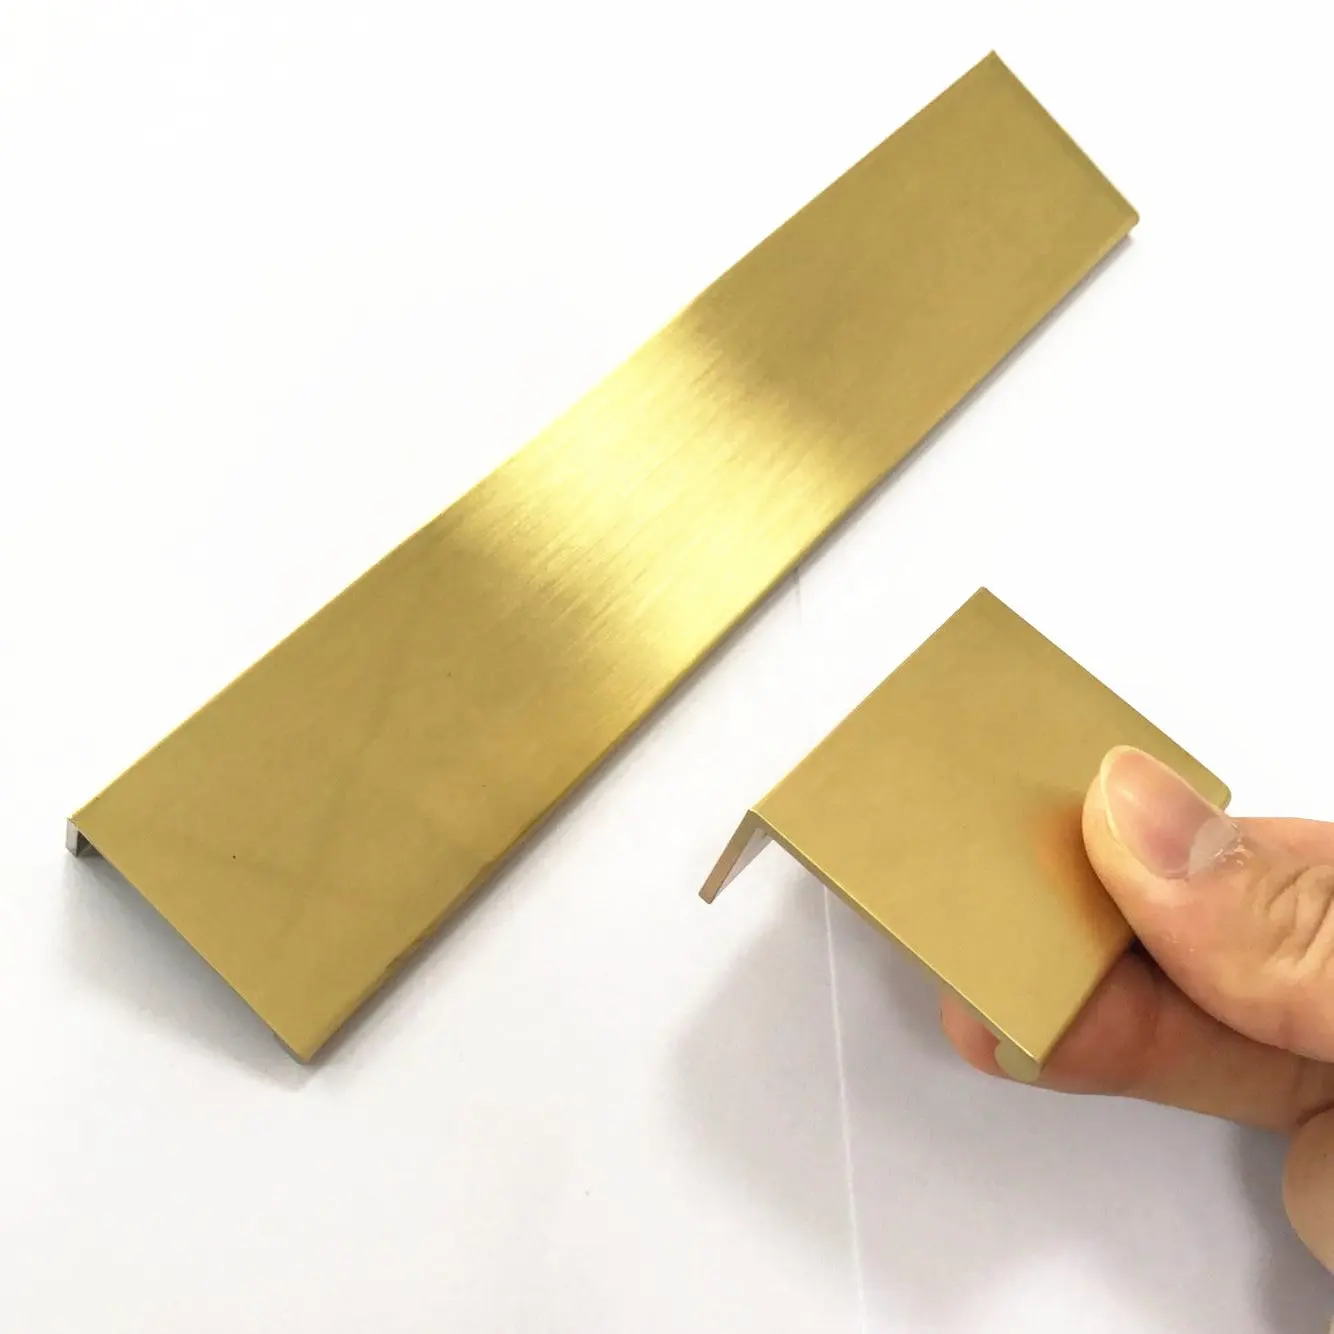 Aluminium Cabinet Kitchen High Quality Profile Edge Handle G0022 Gold Finger Pull Handles